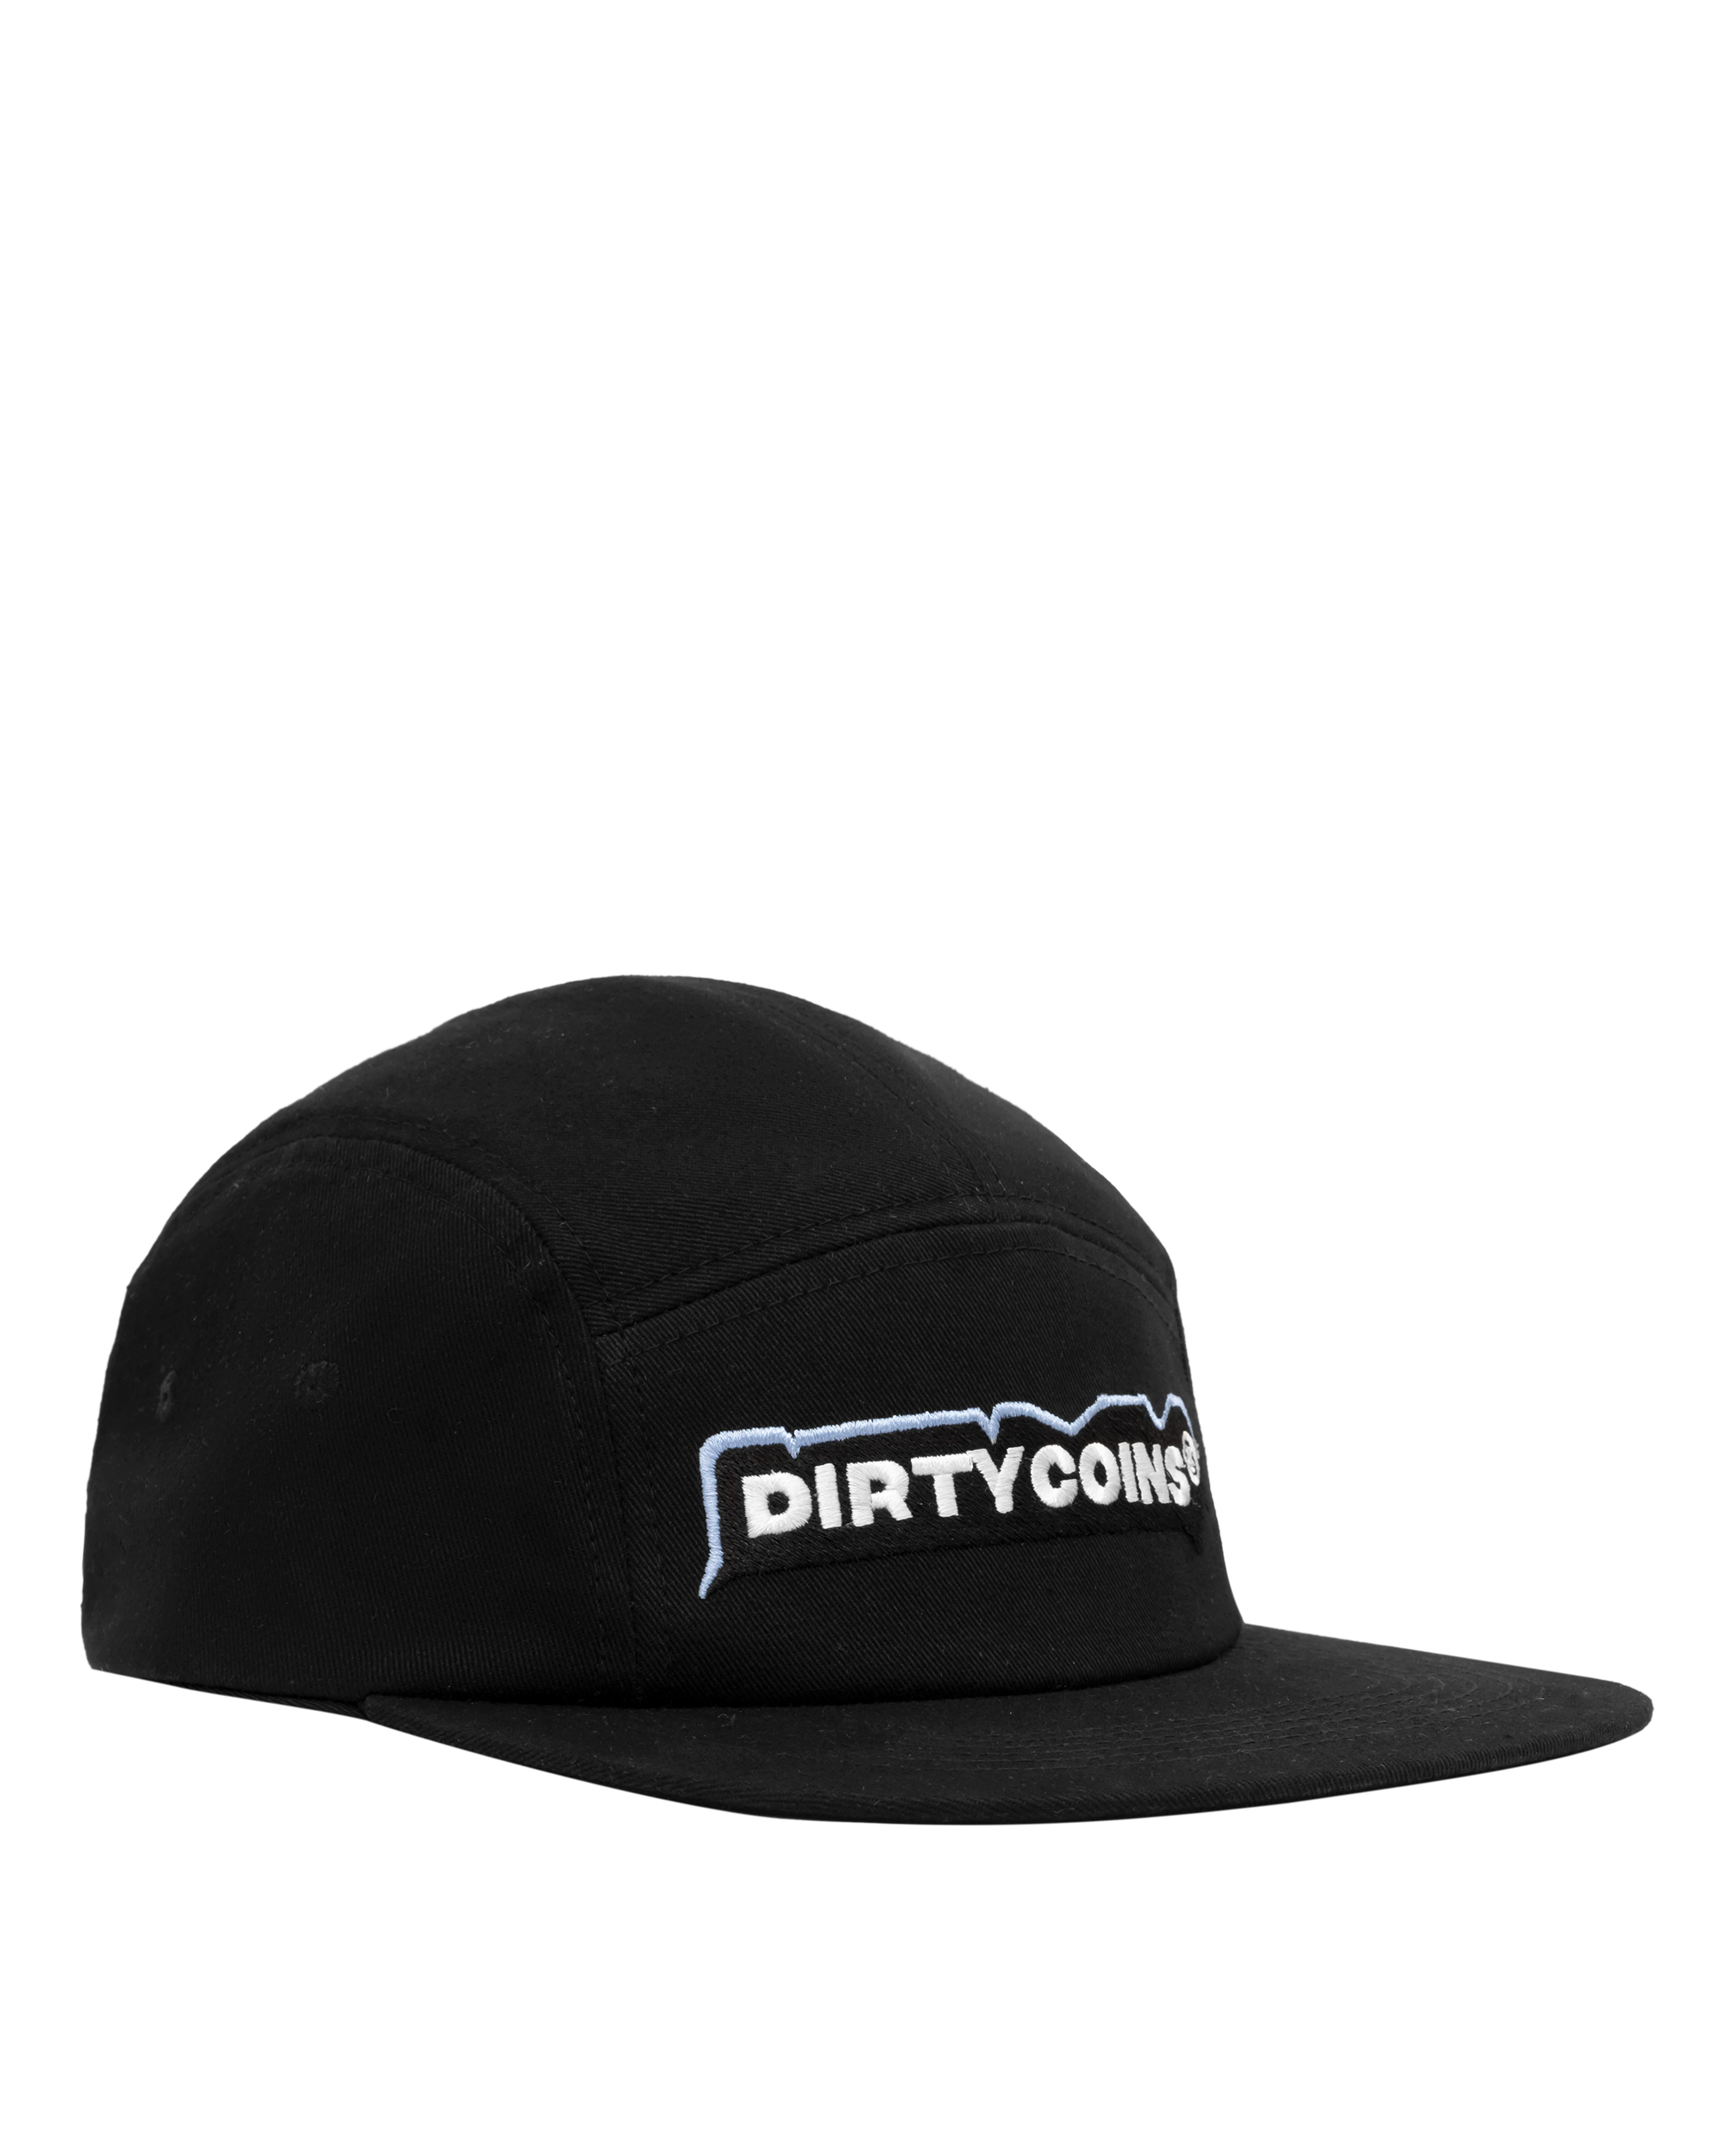 DirtyCoins 5 Panels Cap - Black